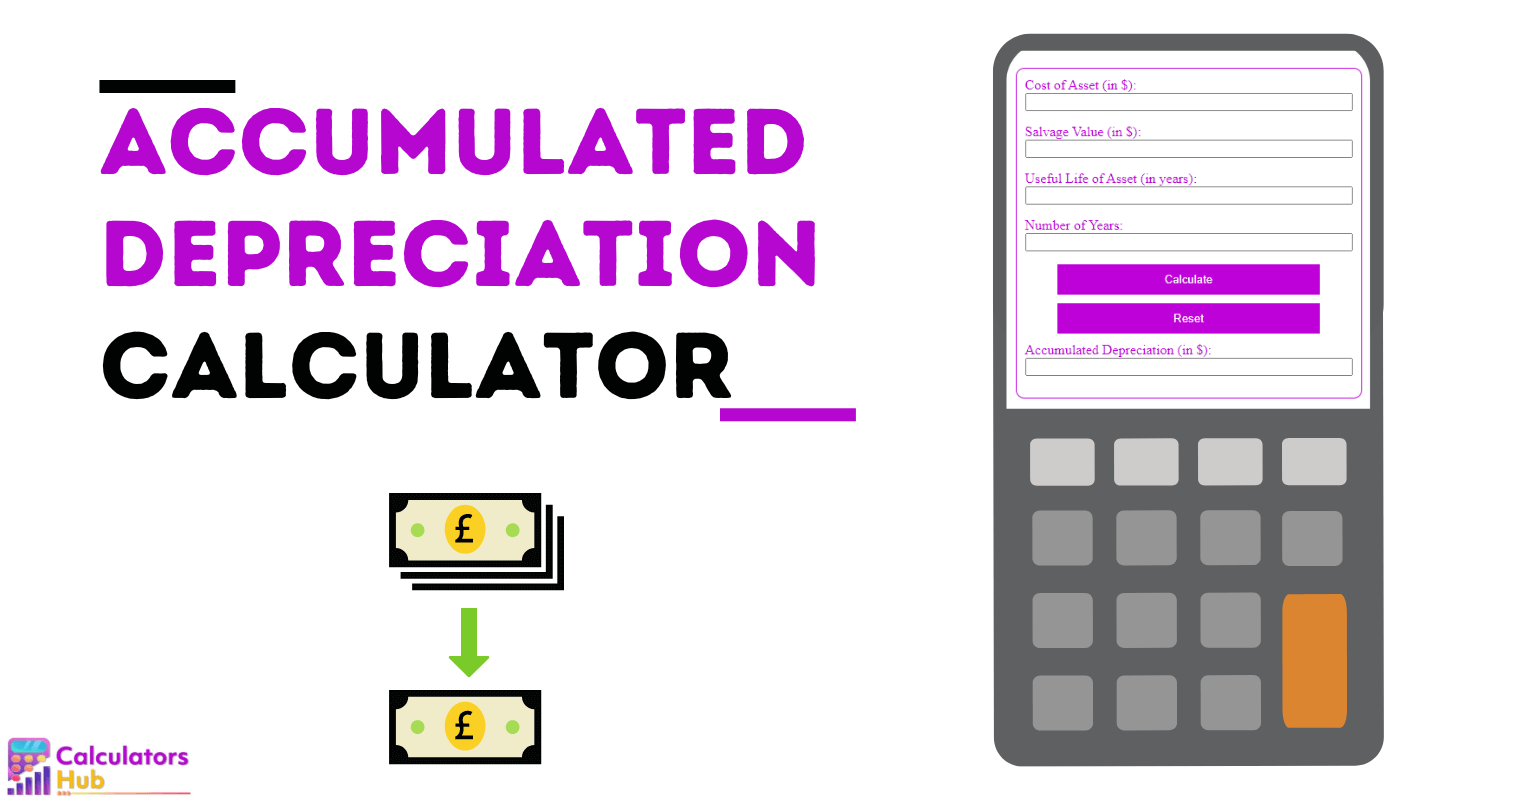 Accumulated Depreciation Calculator